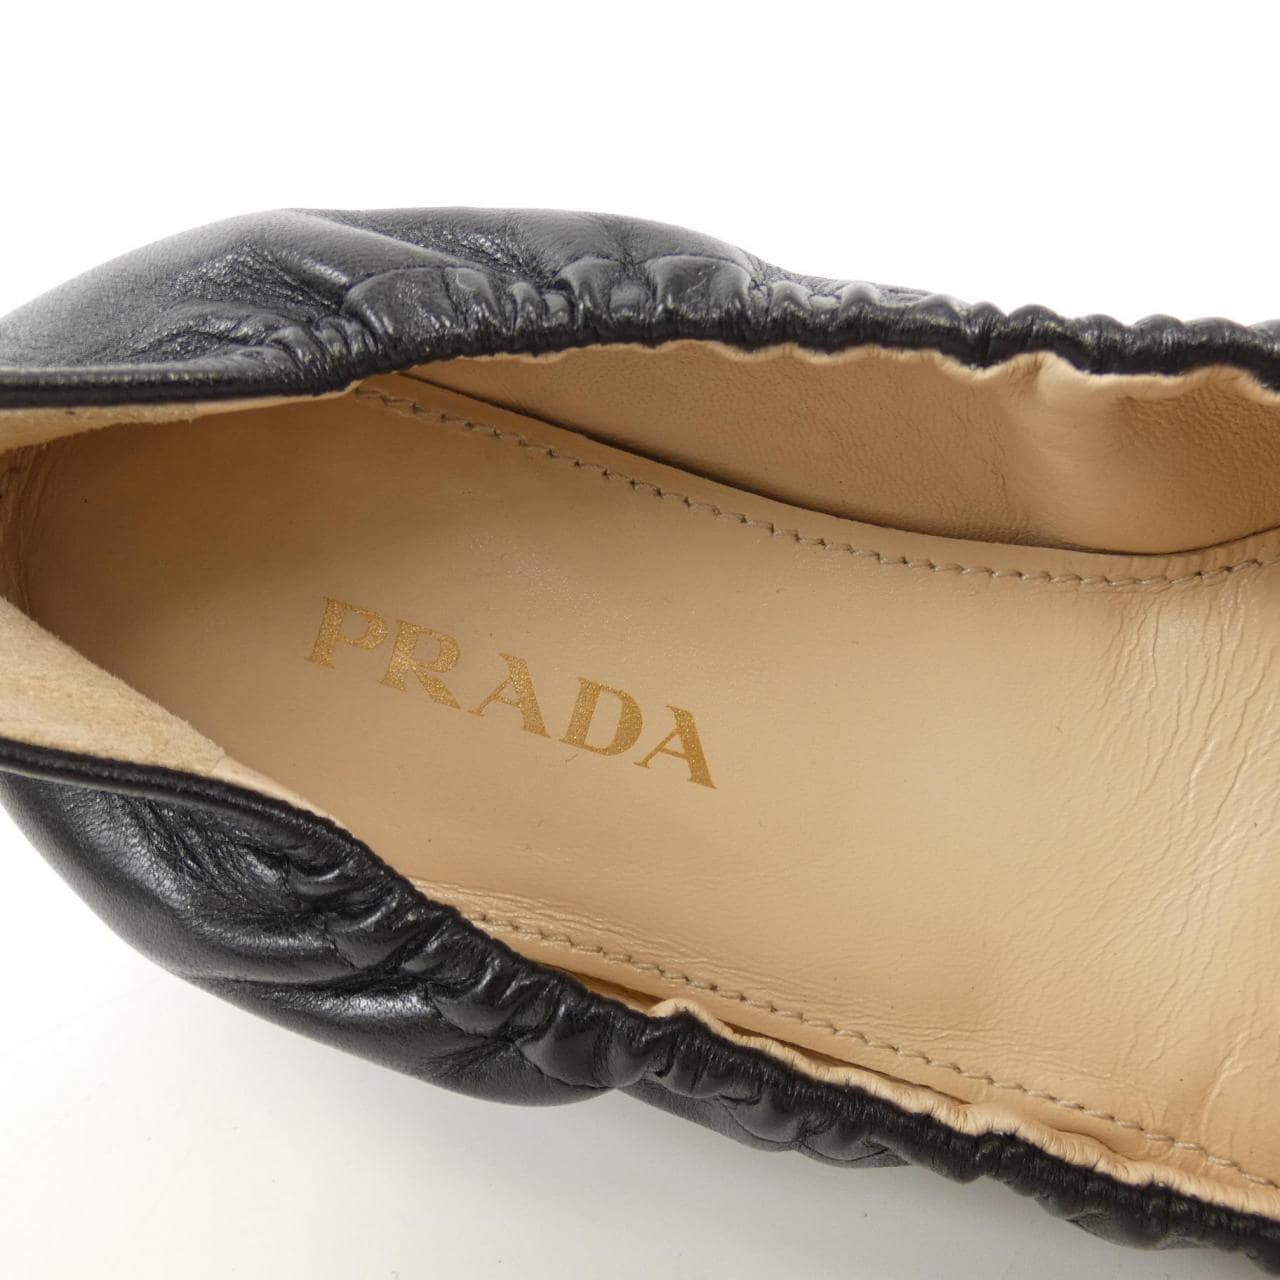 Prada PRADA flat shoes